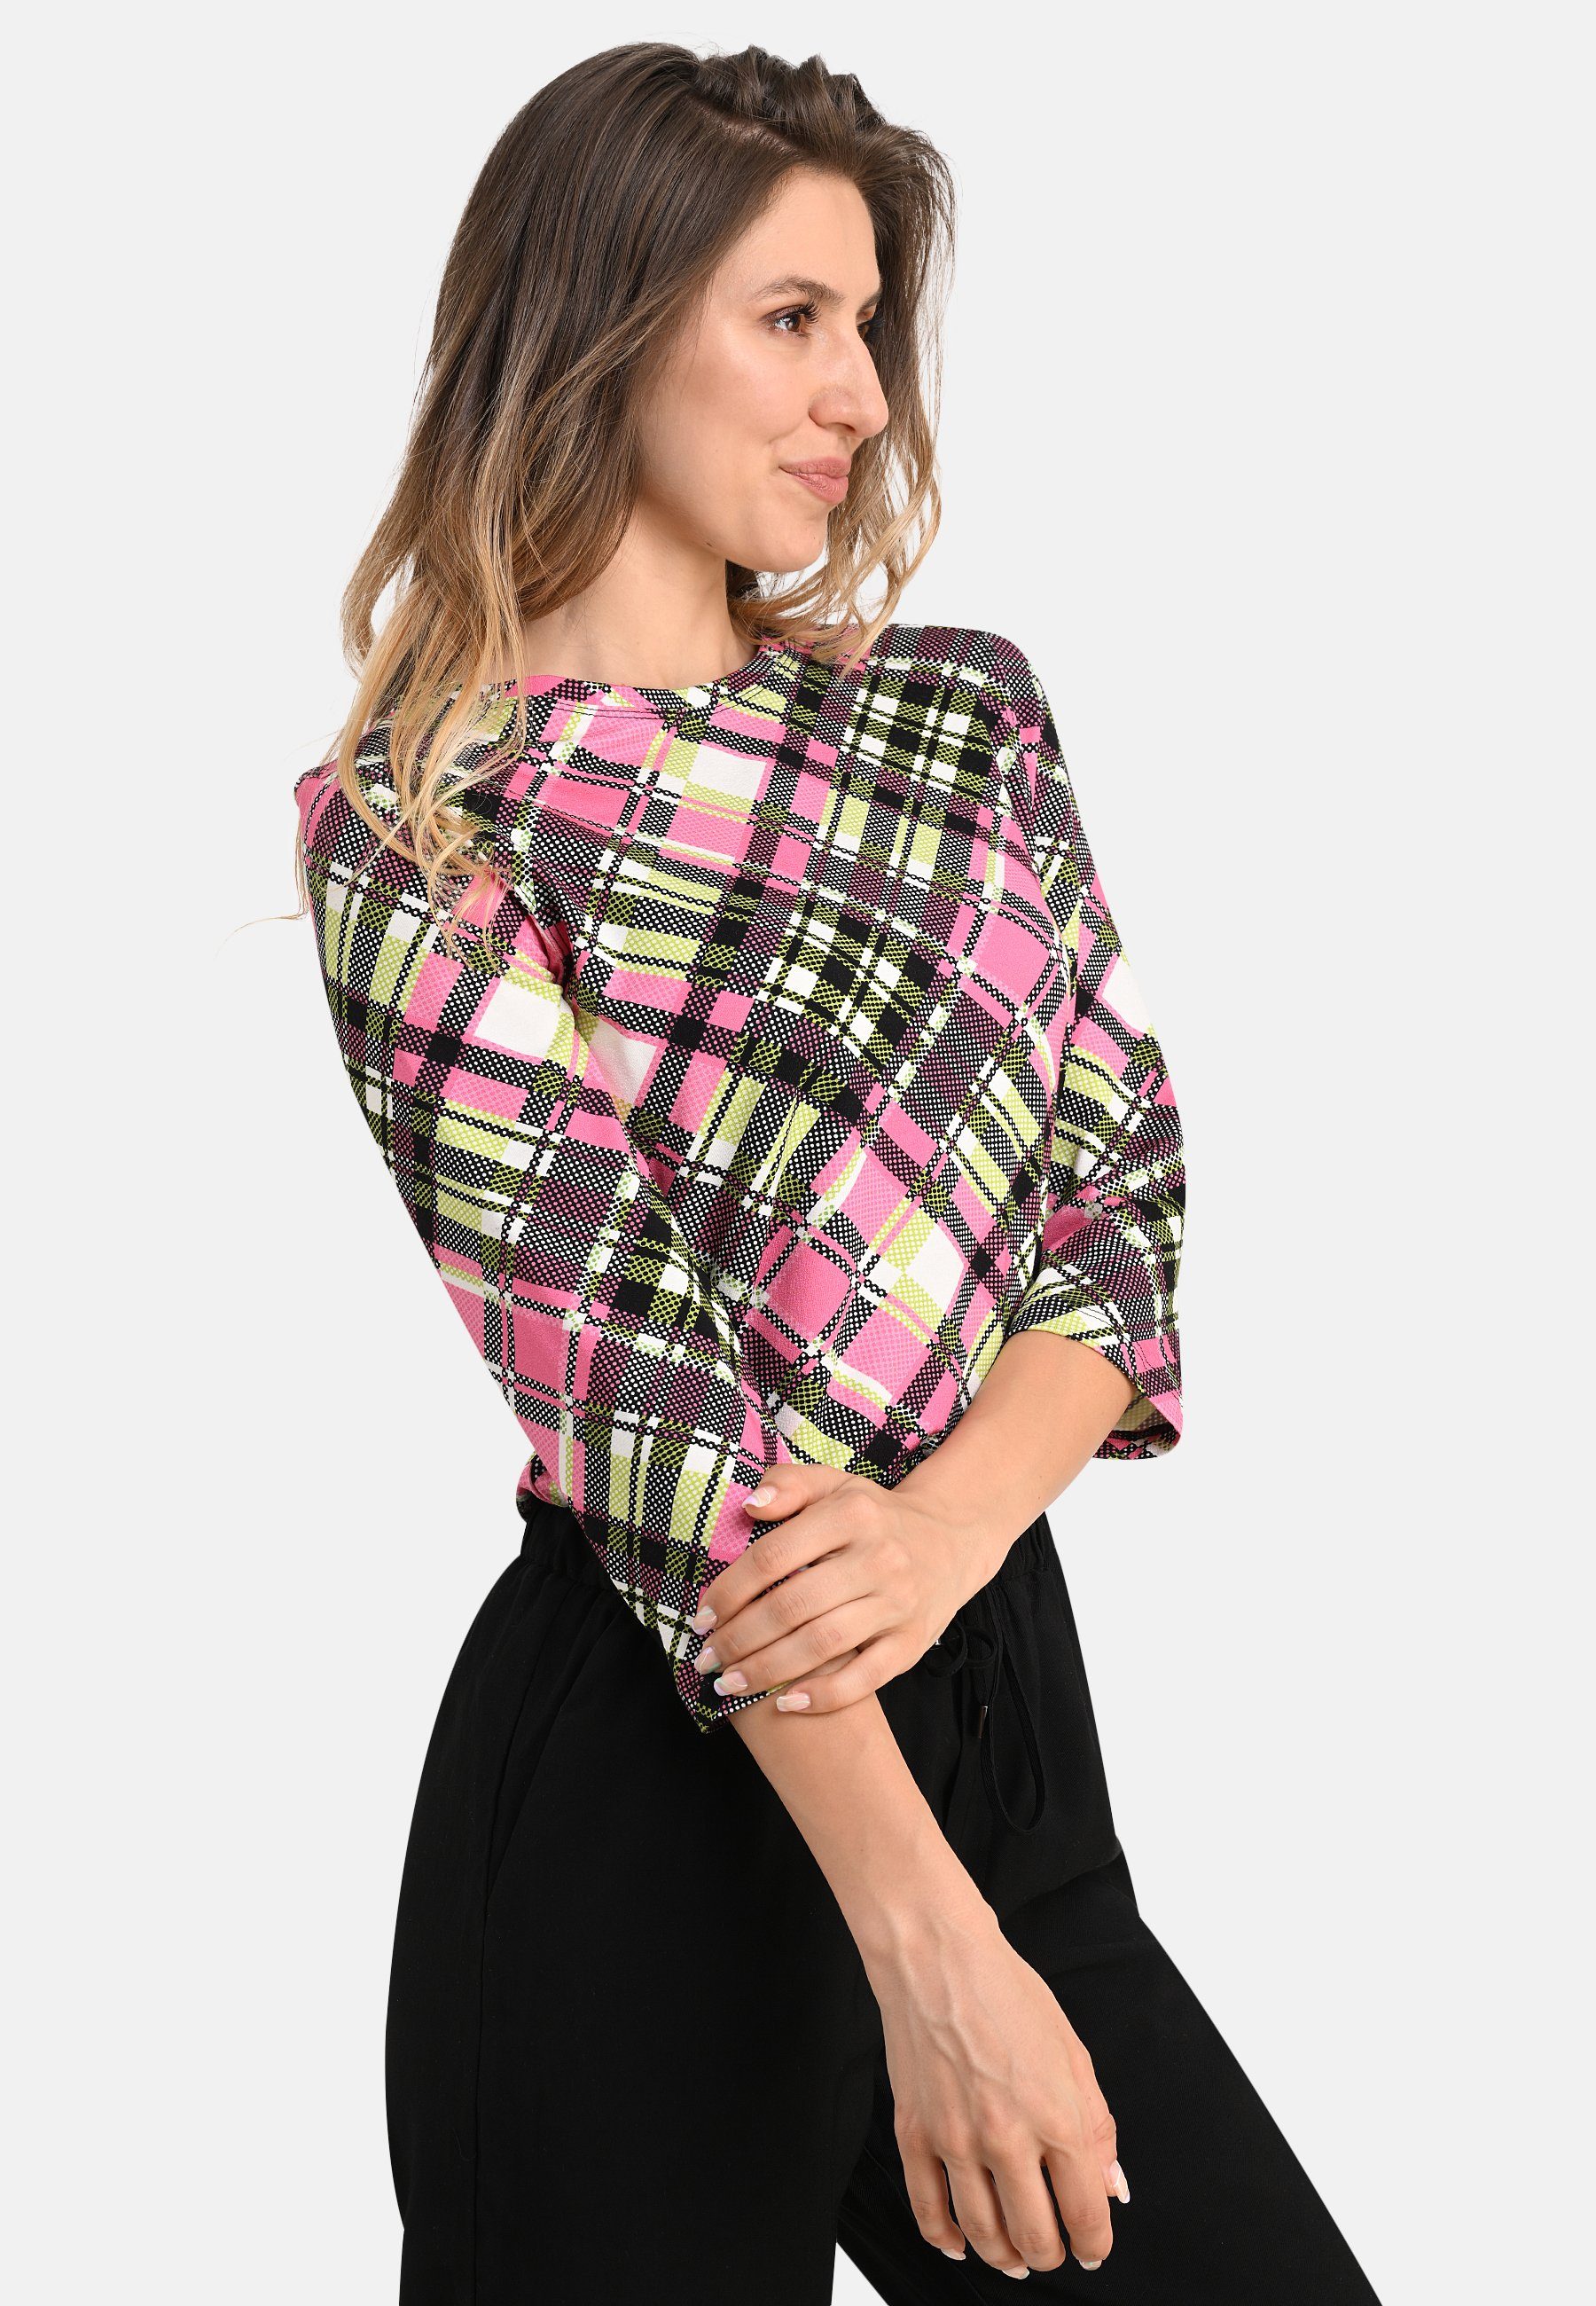 09/pink-green ElasticCheck - Shirt (1-tlg) T-Shirt BICALLA